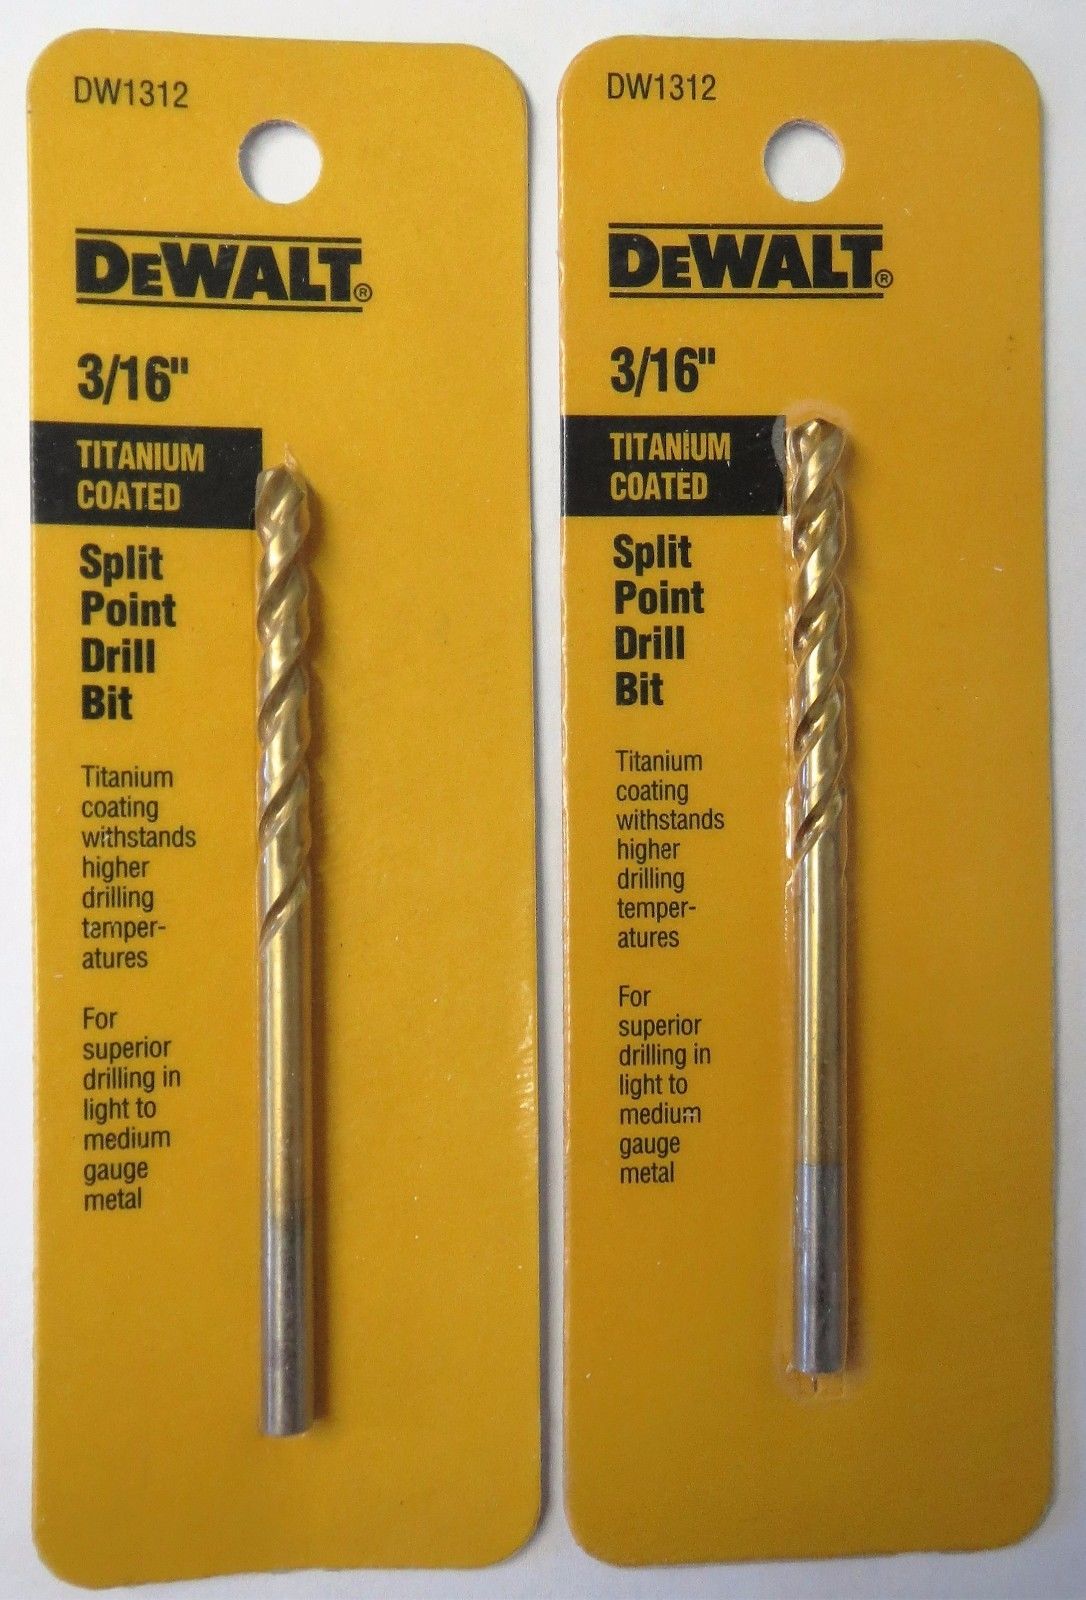 Dewalt DW1312 3/16" Titanium Coated Split Point Drill Bit 2 Packs